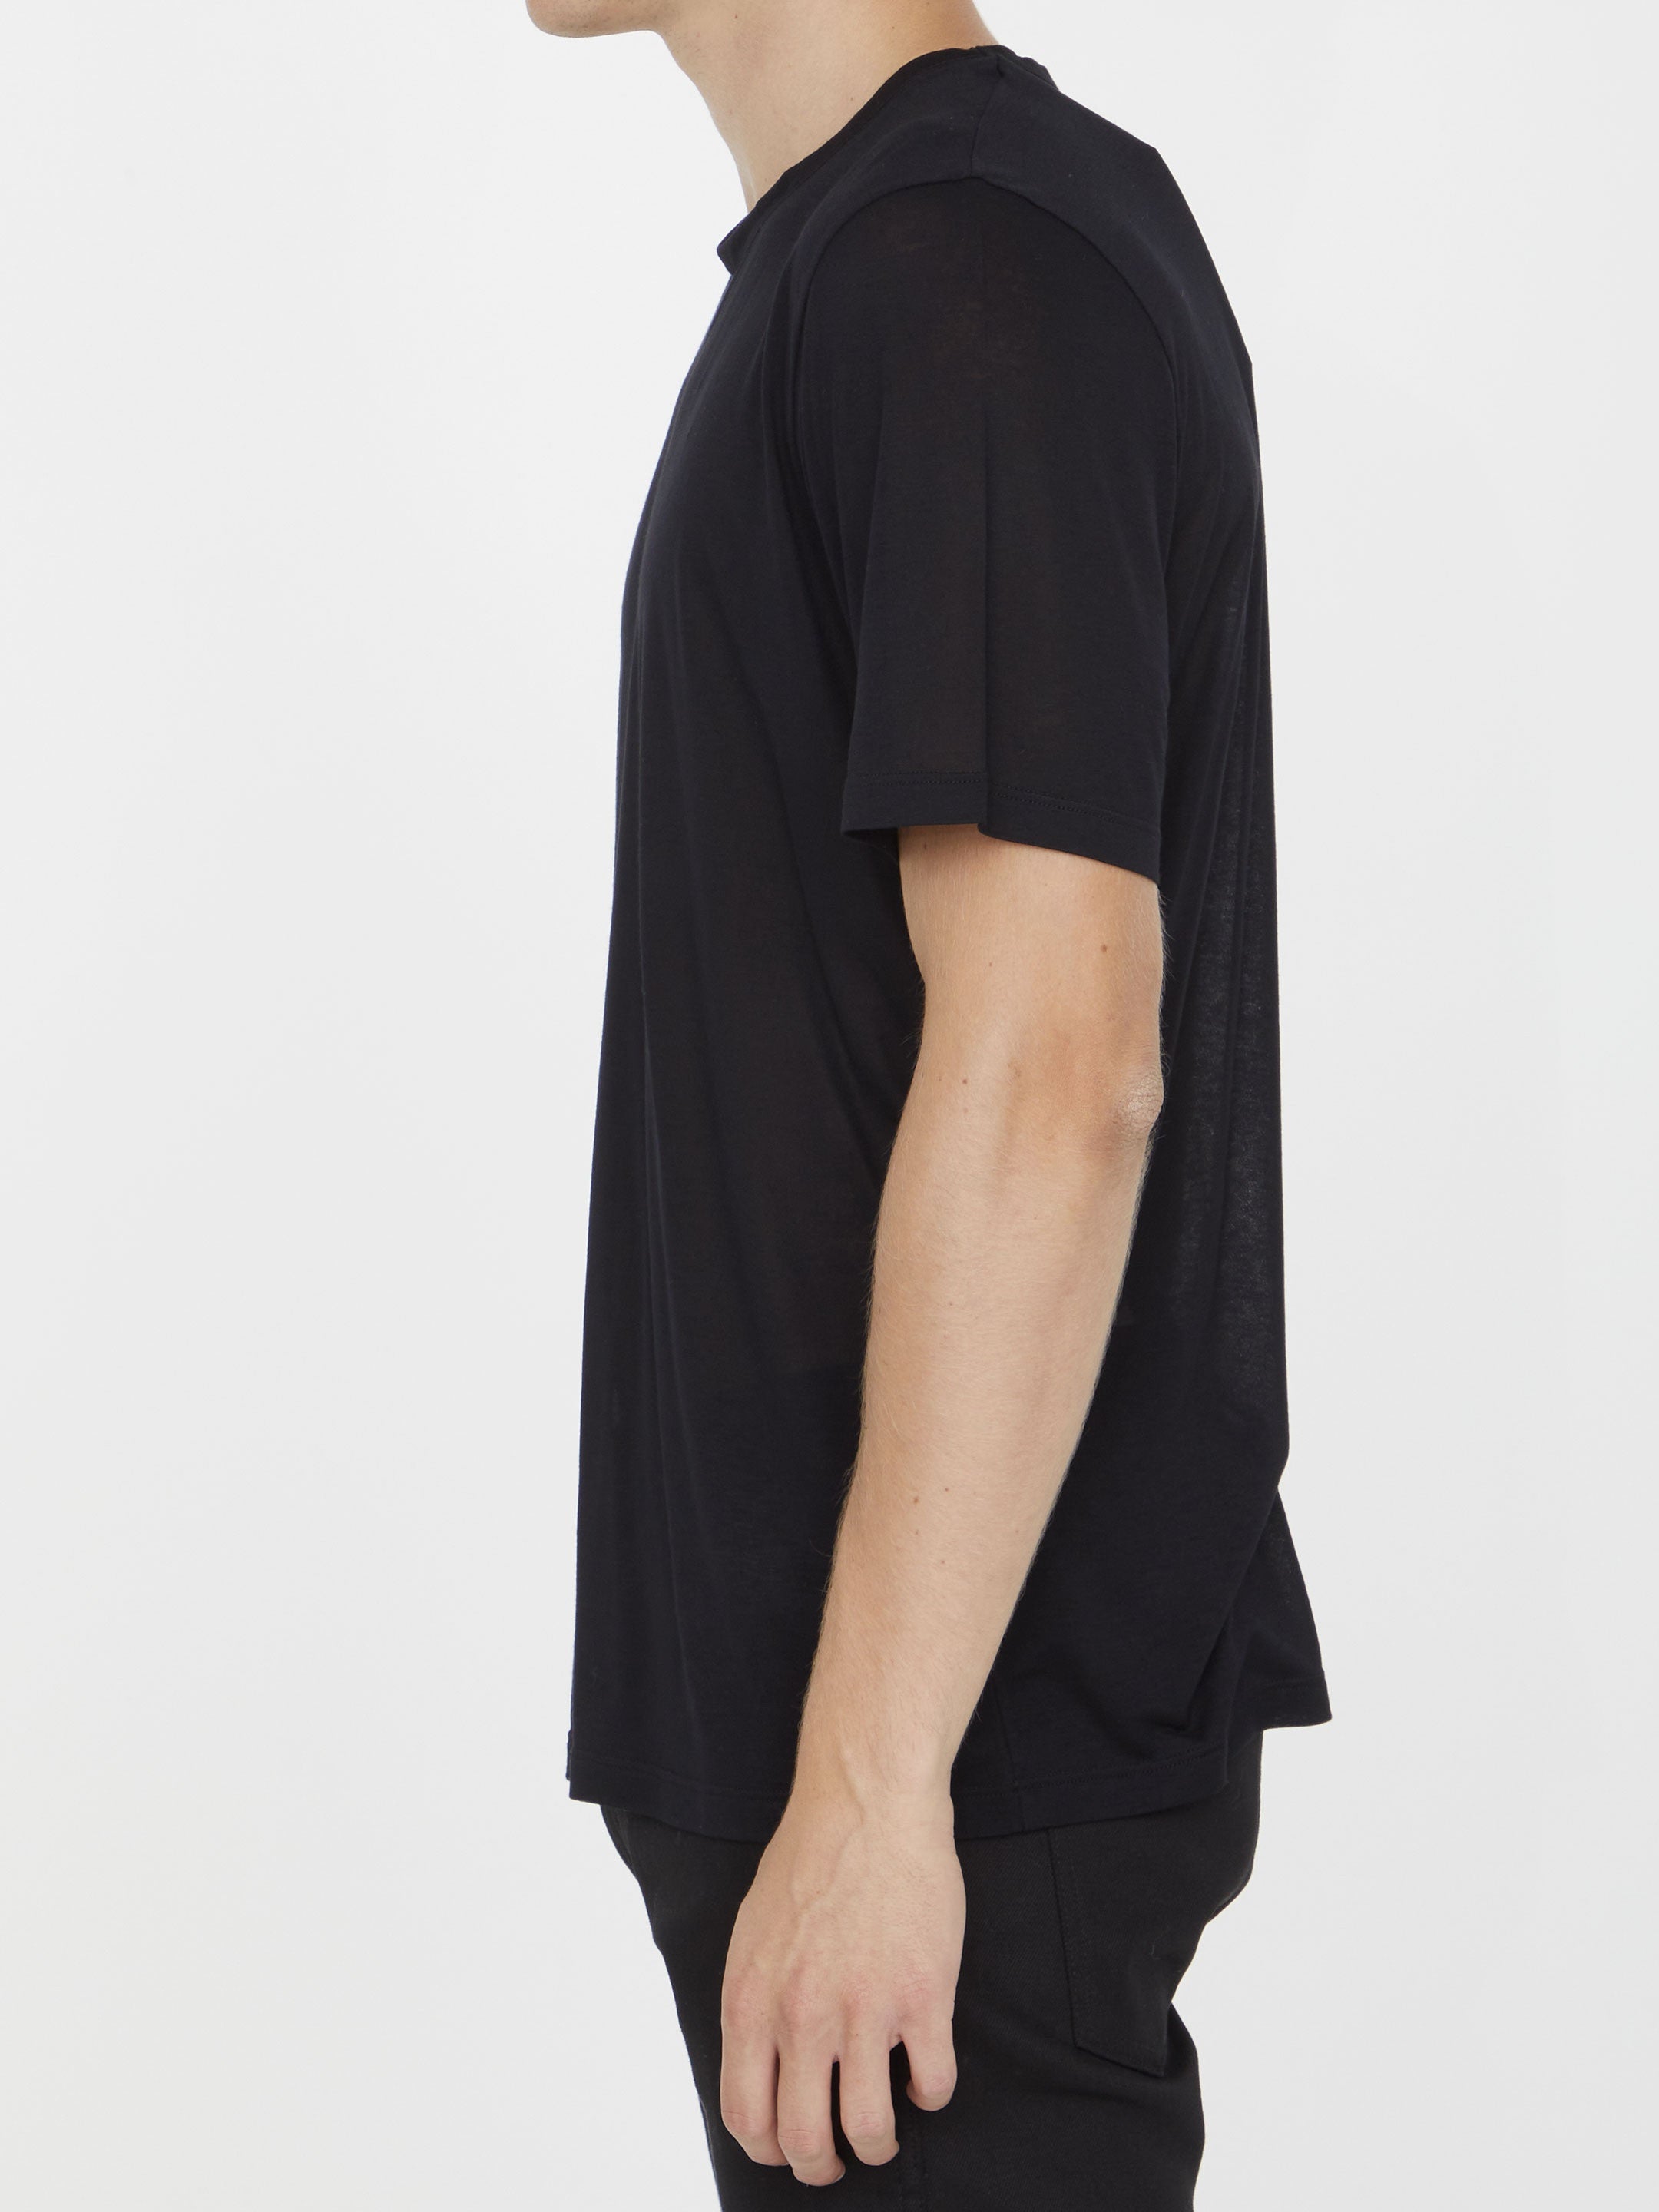 SAINT-LAURENT-OUTLET-SALE-Black-t-shirt-with-logo-Shirts-ARCHIVE-COLLECTION-3.jpg